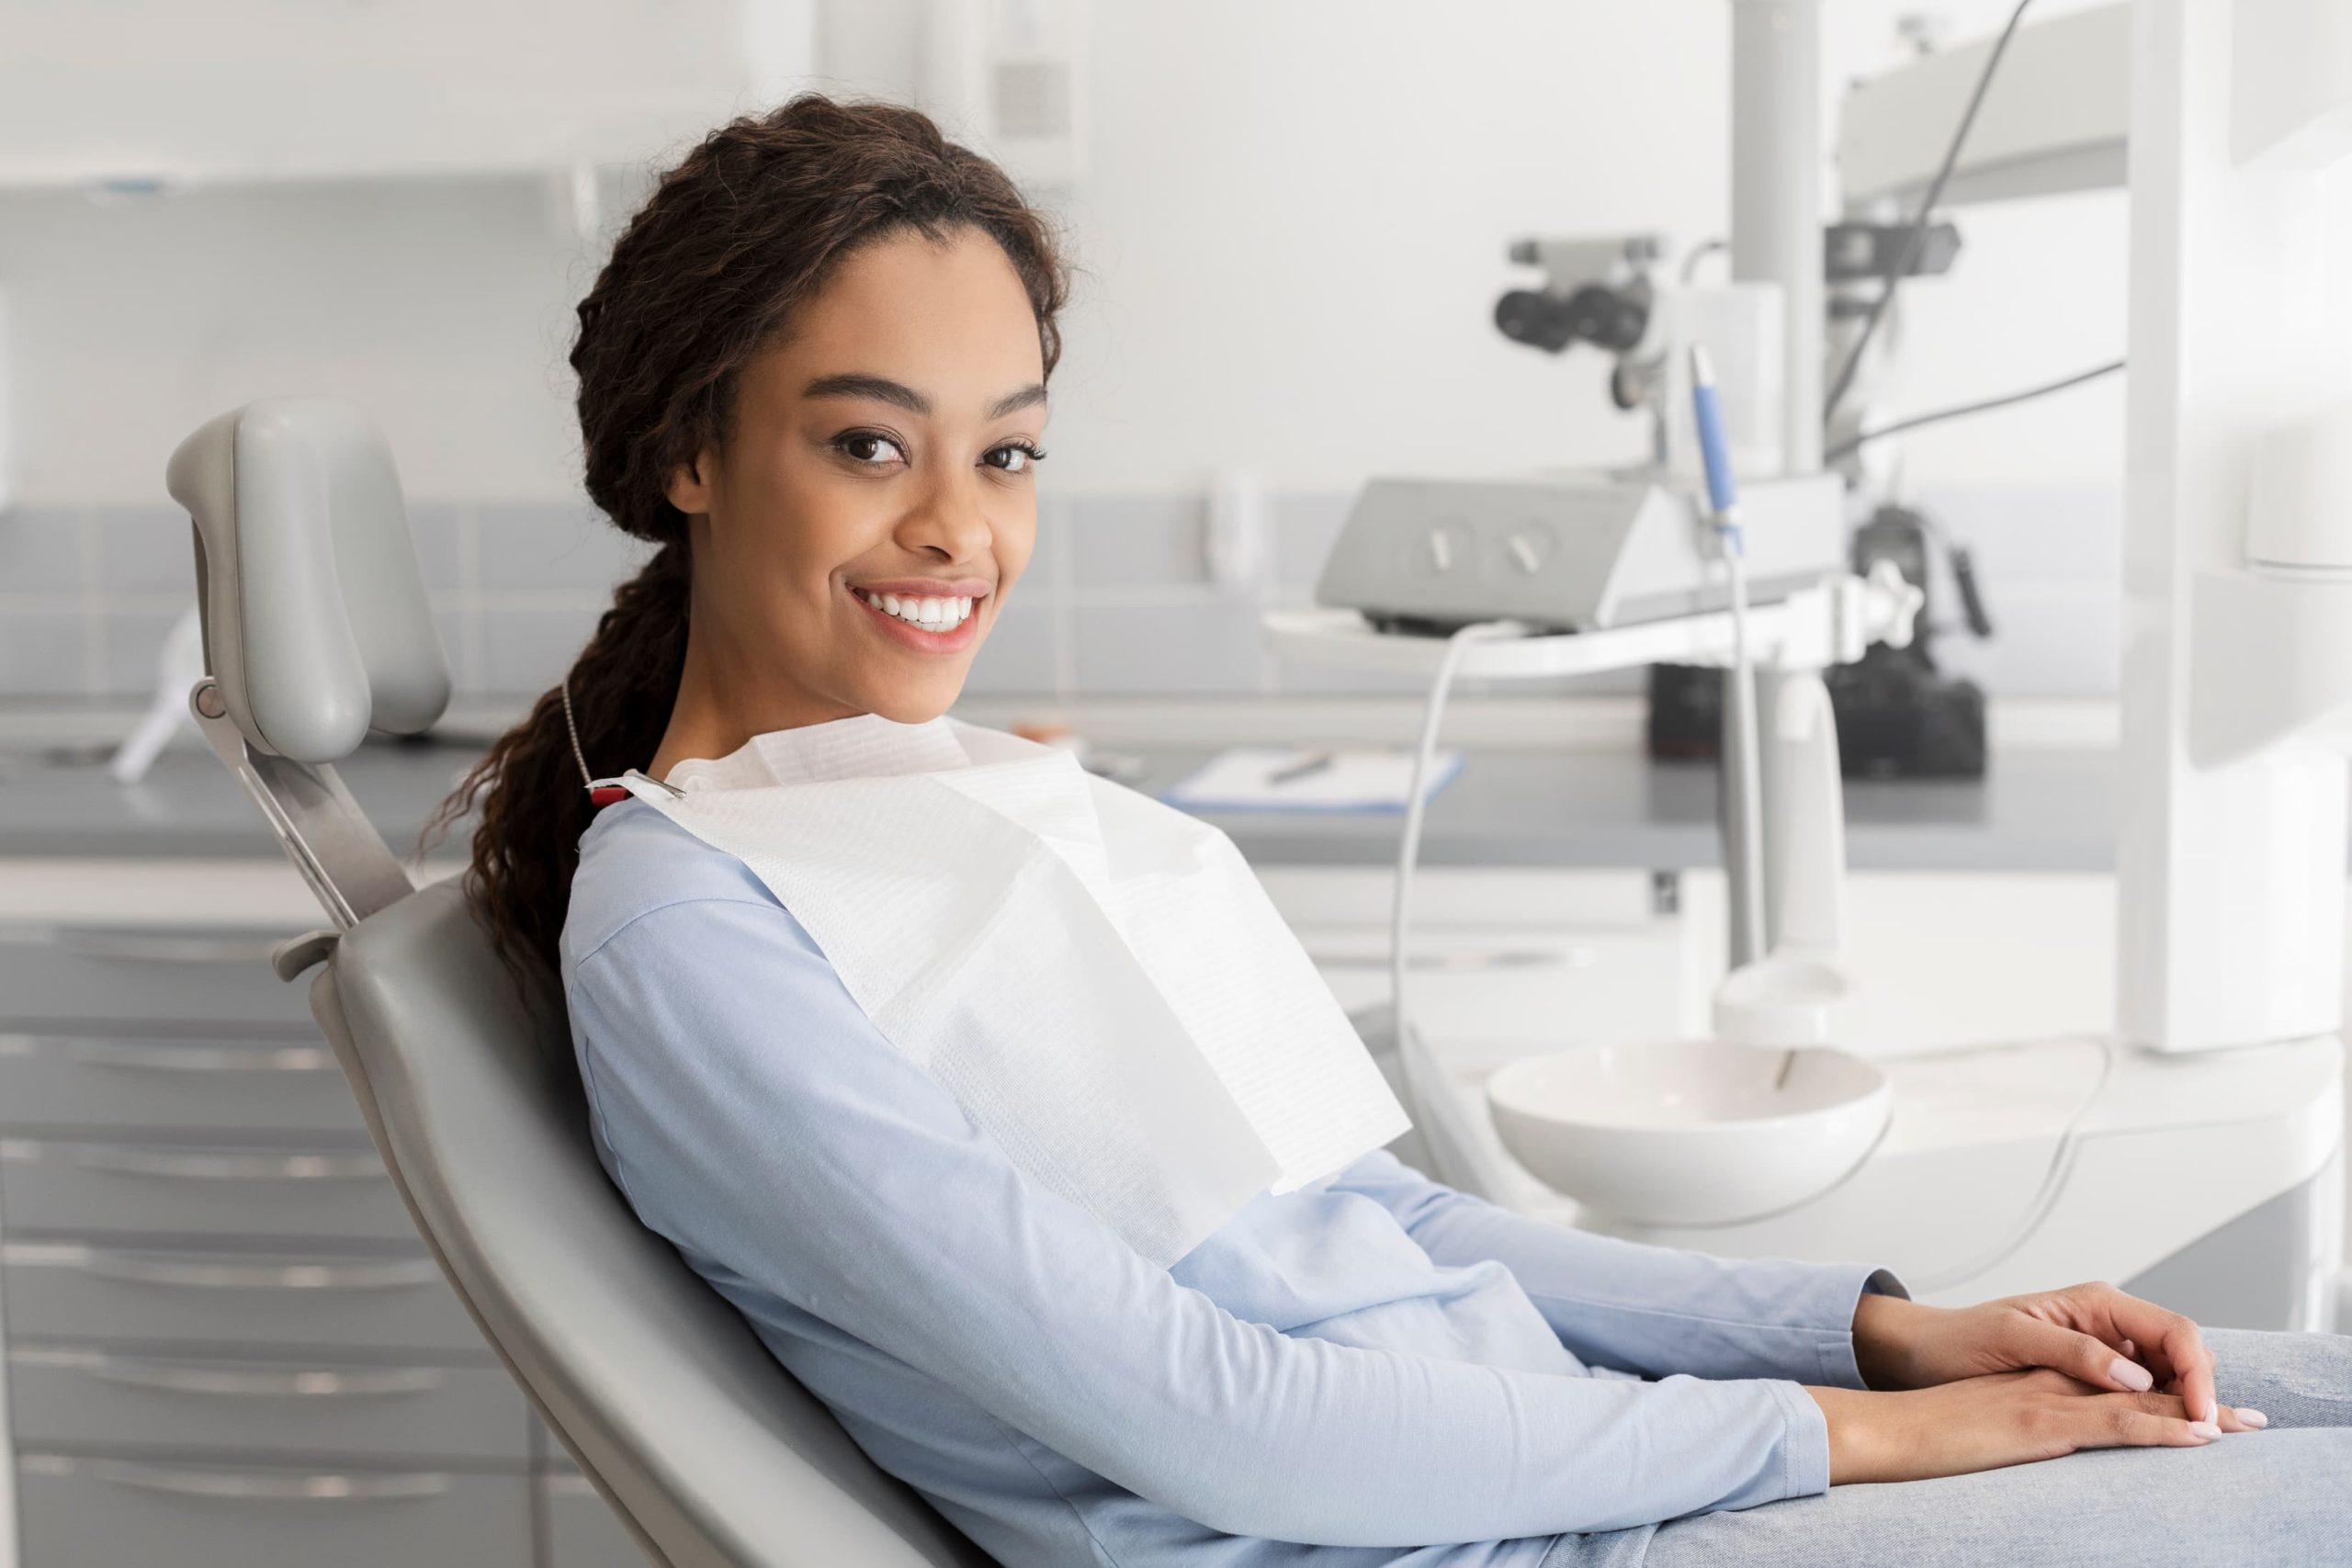 Datwyler Orthodontics: Your Trusted Orthodontist in El Dorado Hills, CA